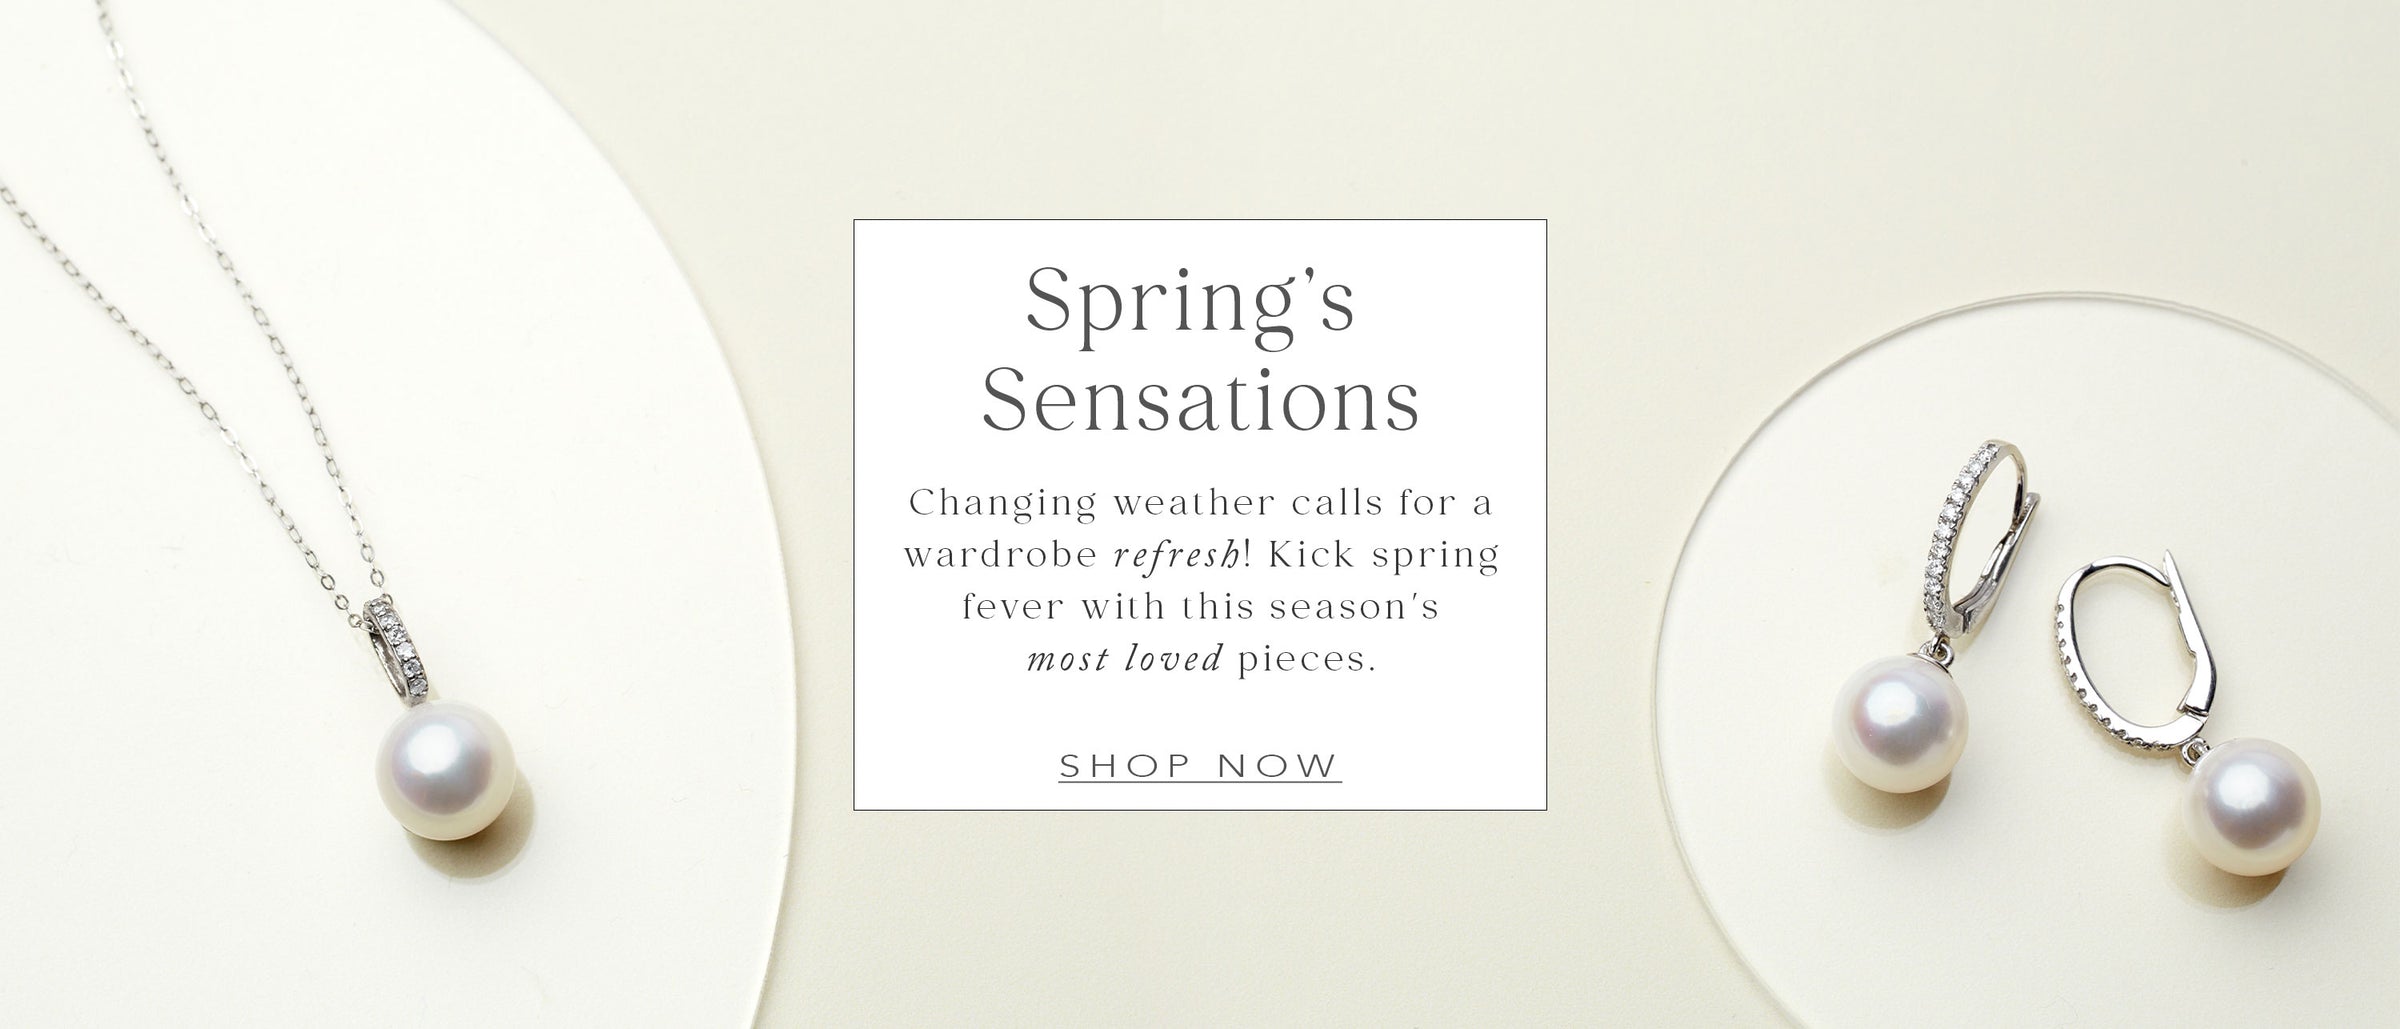 Spring's Sensations Best Selling Pearls of the Season